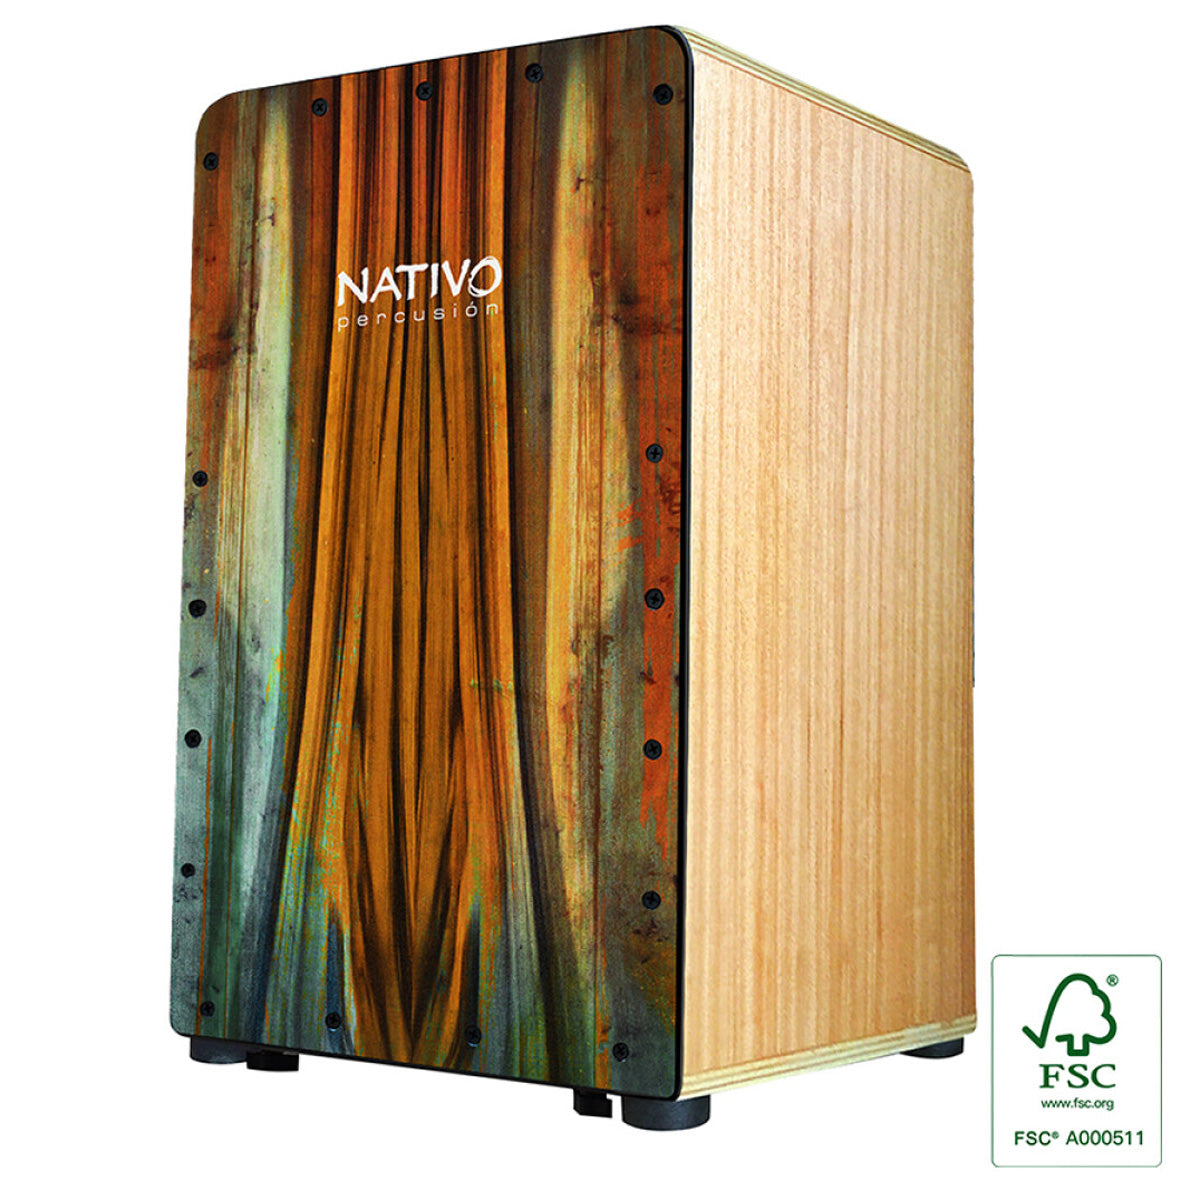 Nativo Studio Series Cajon with Pacha Frontplate